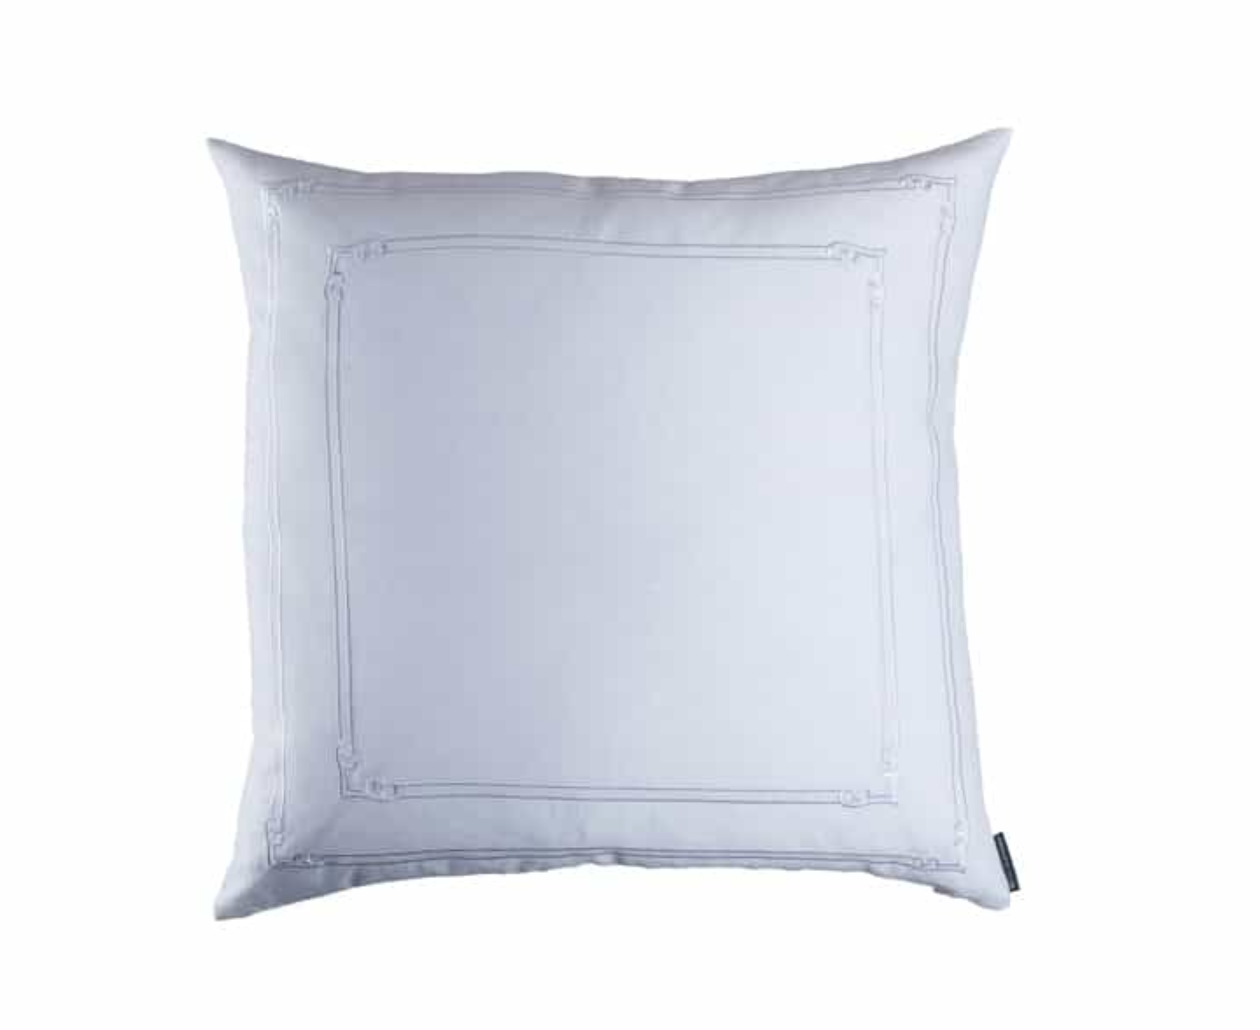 Lili Alessandra Casablanca White Linen Euro Pillow